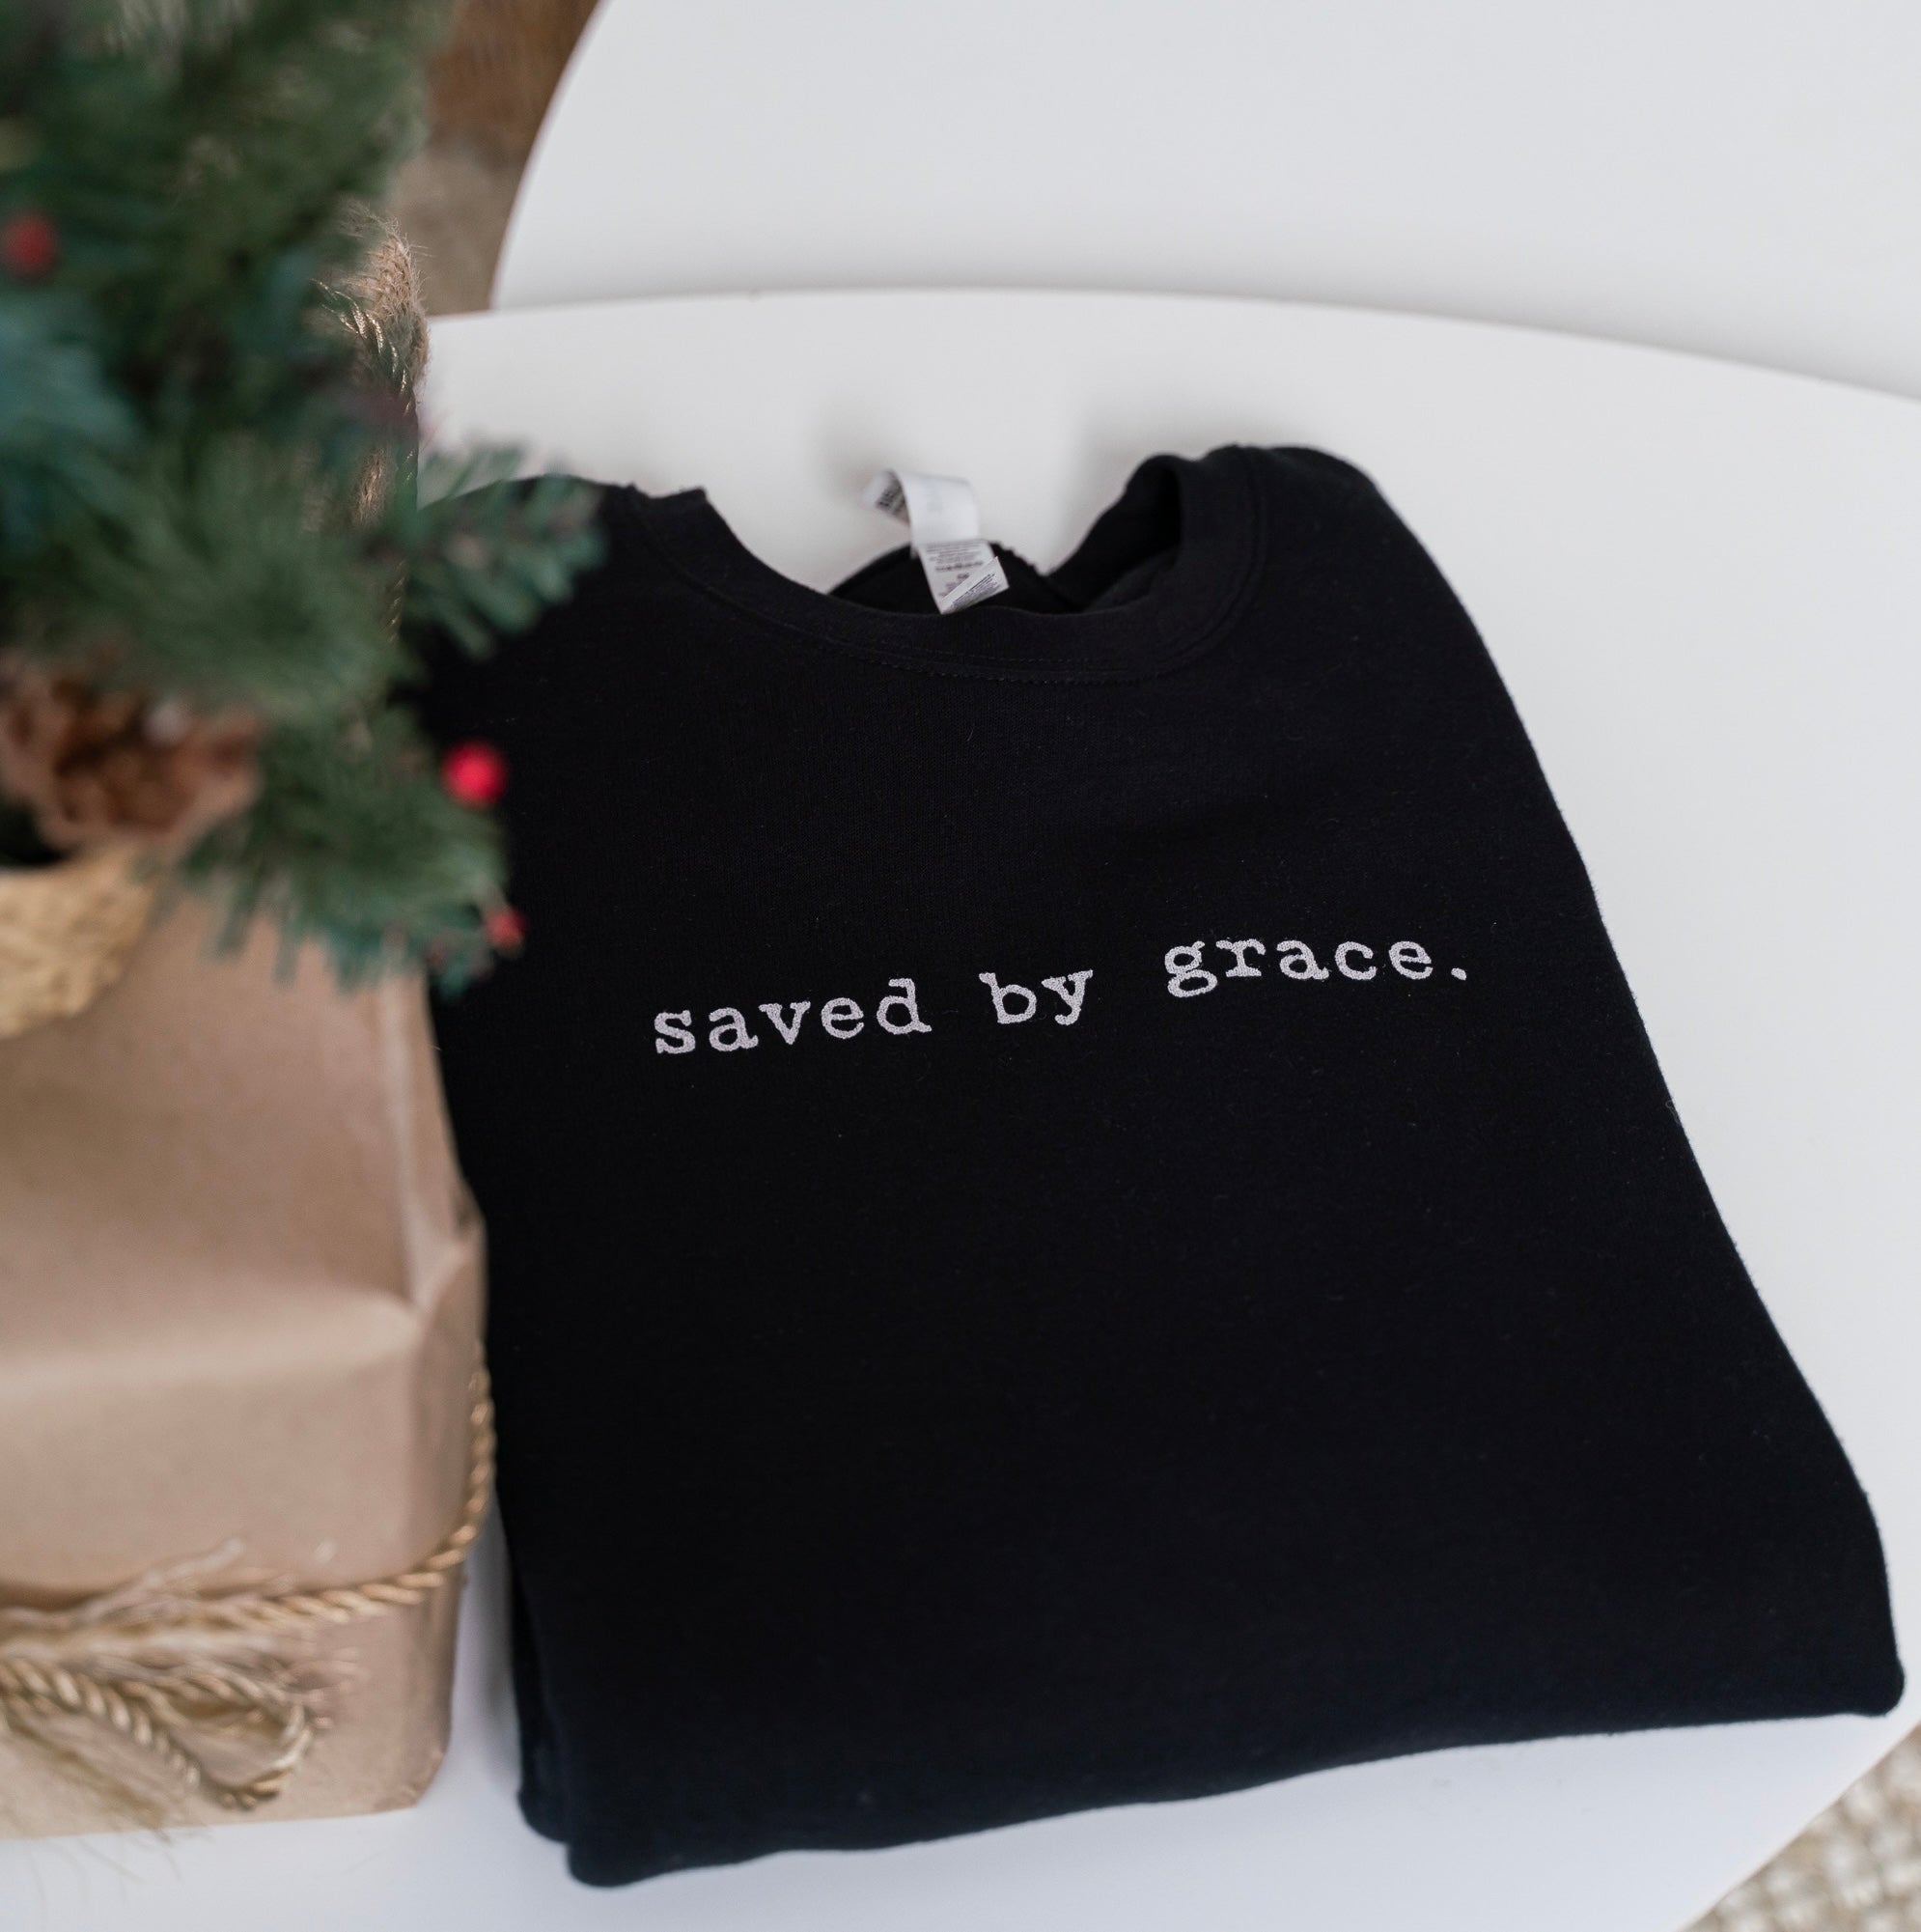 'Saved By Grace' Sweatshirt